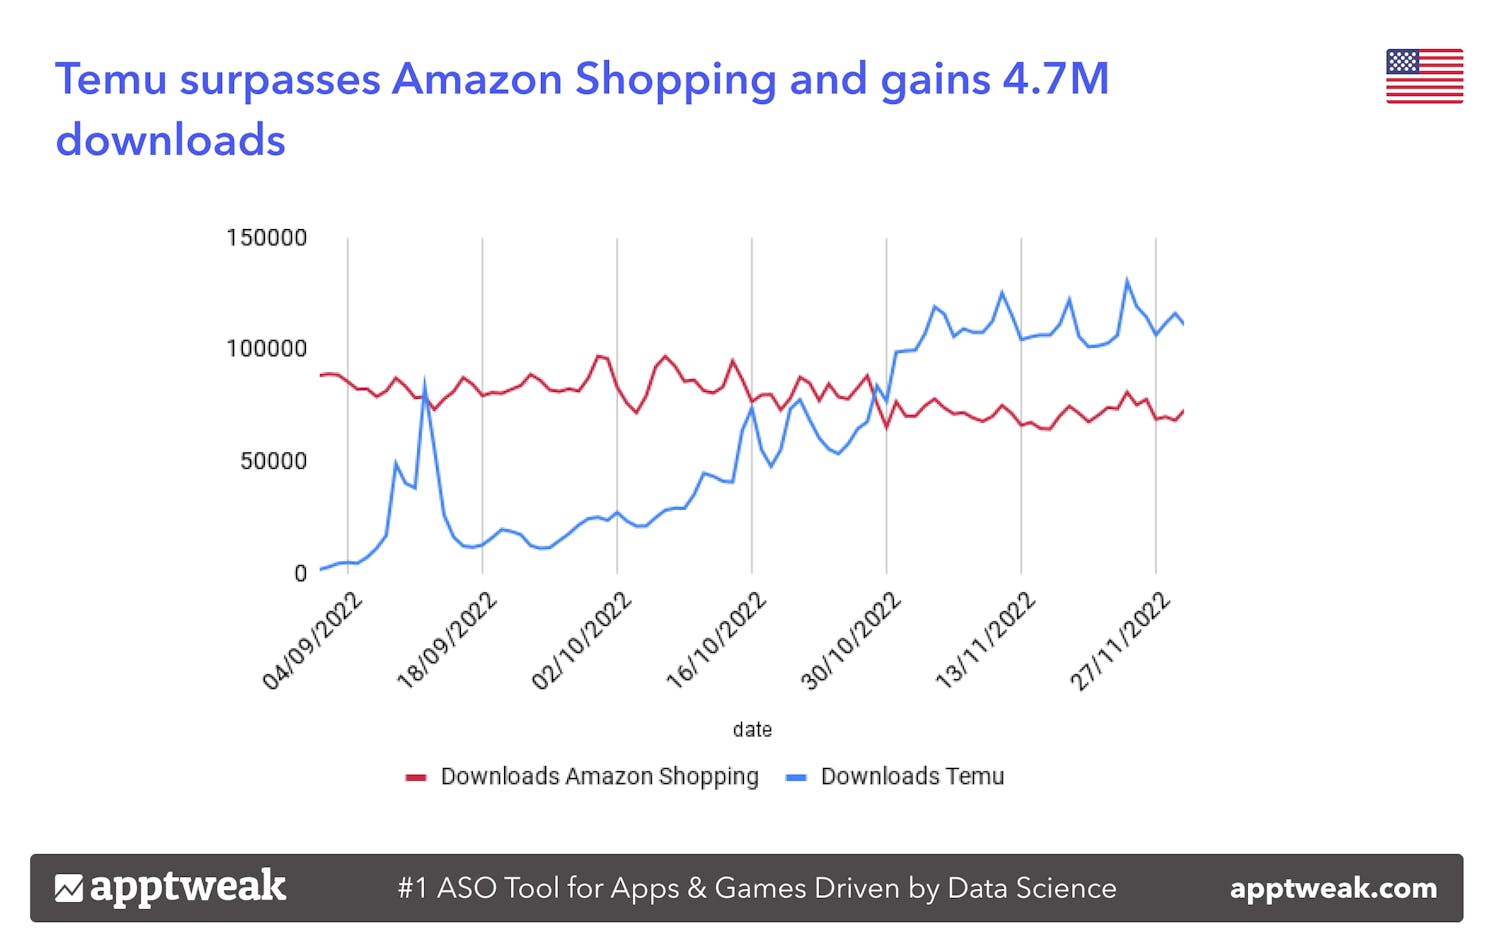 Temu surpasses Amazon Shopping and gains 4.7M downloads.